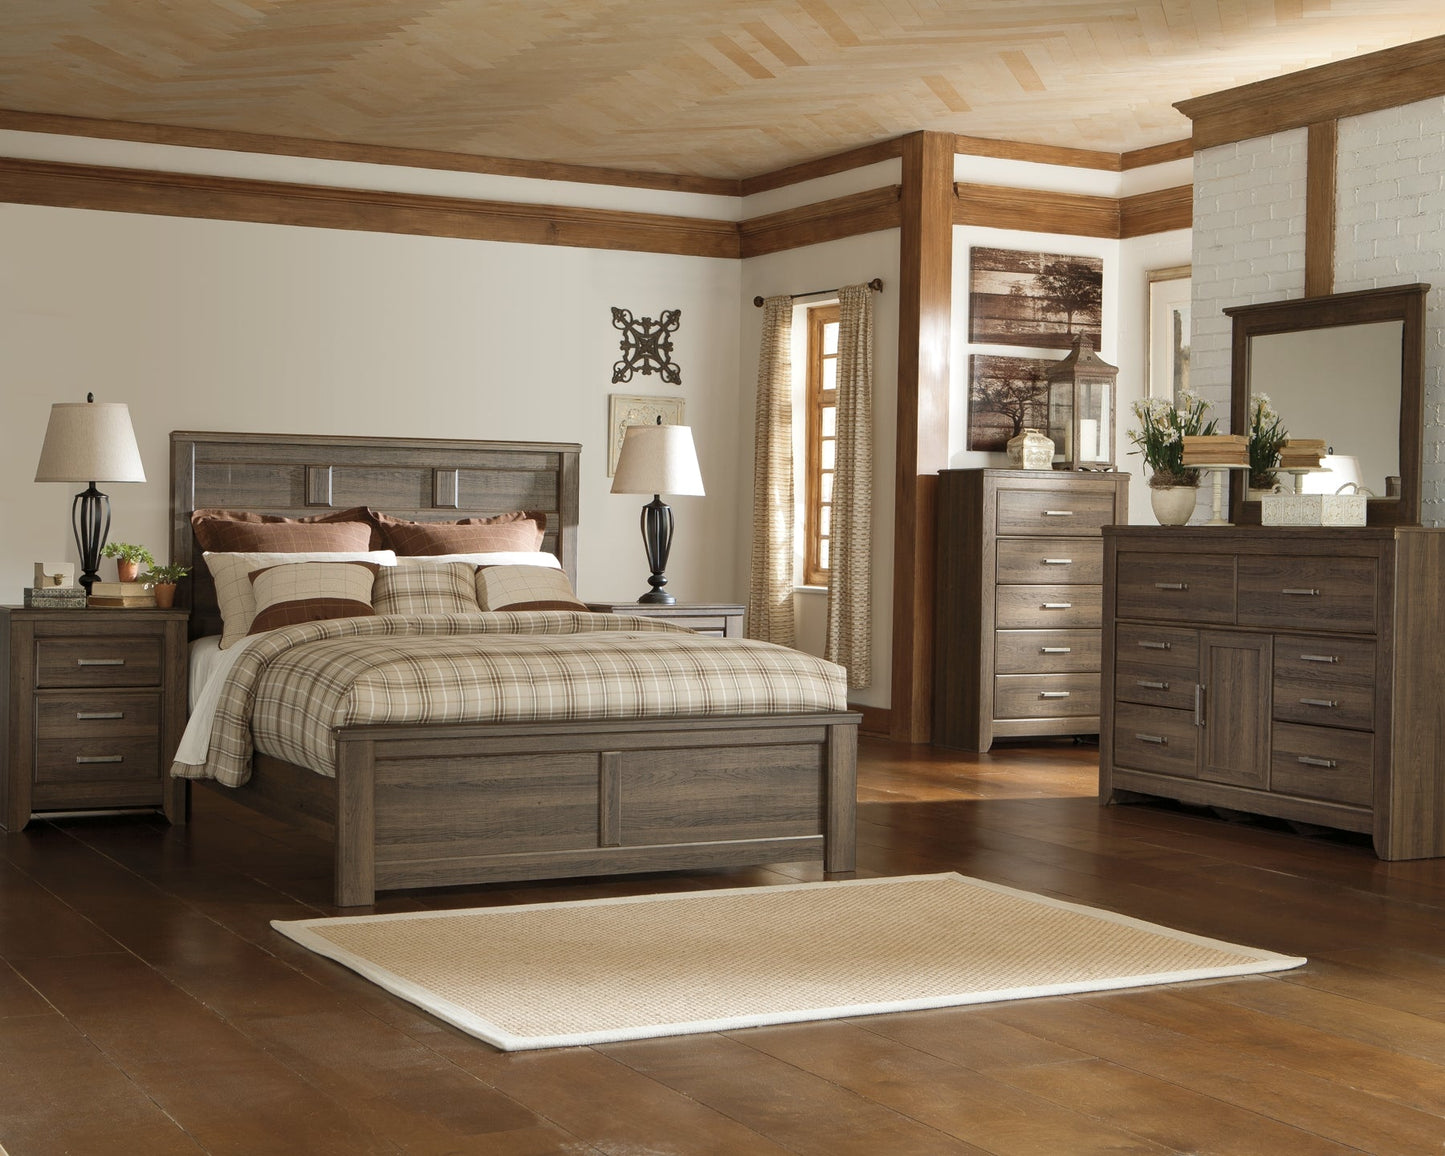 Juararo Queen Panel Bed at Cloud 9 Mattress & Furniture furniture, home furnishing, home decor